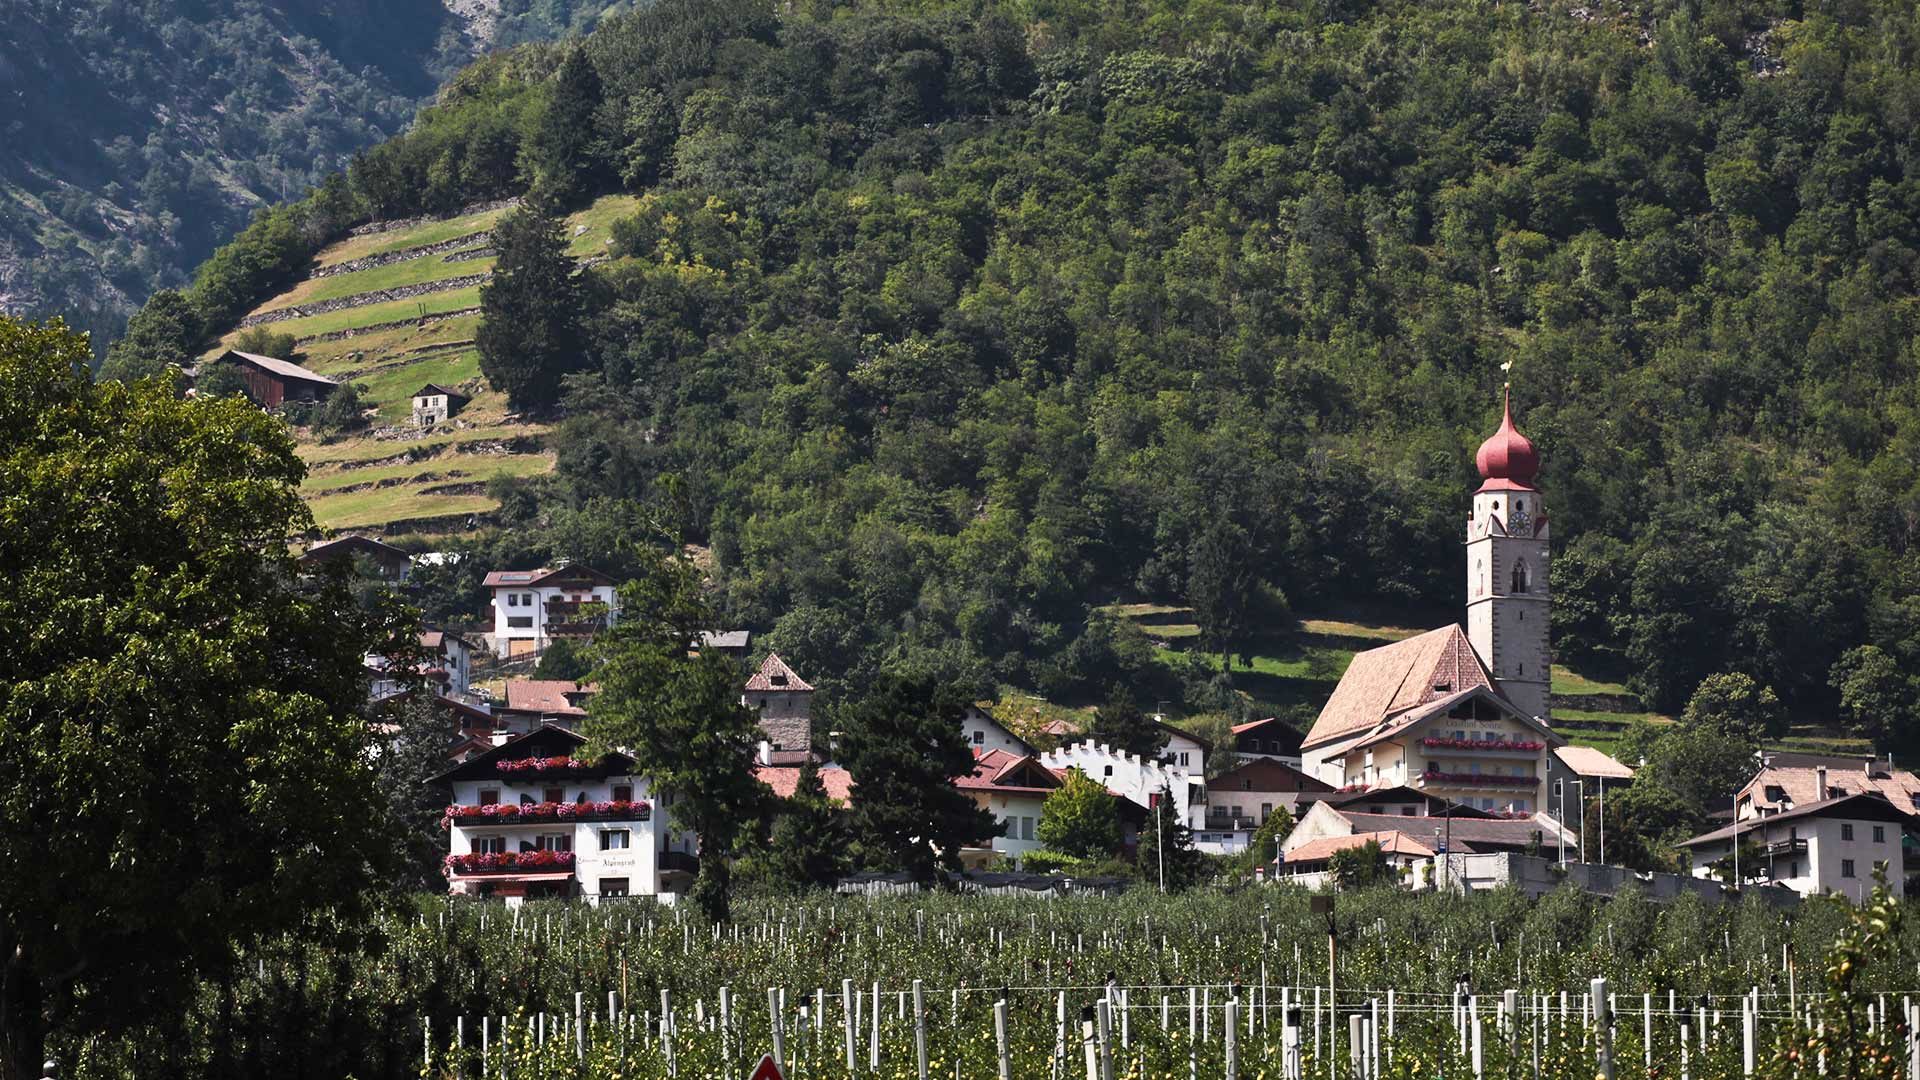 Parcines in Alto Adige